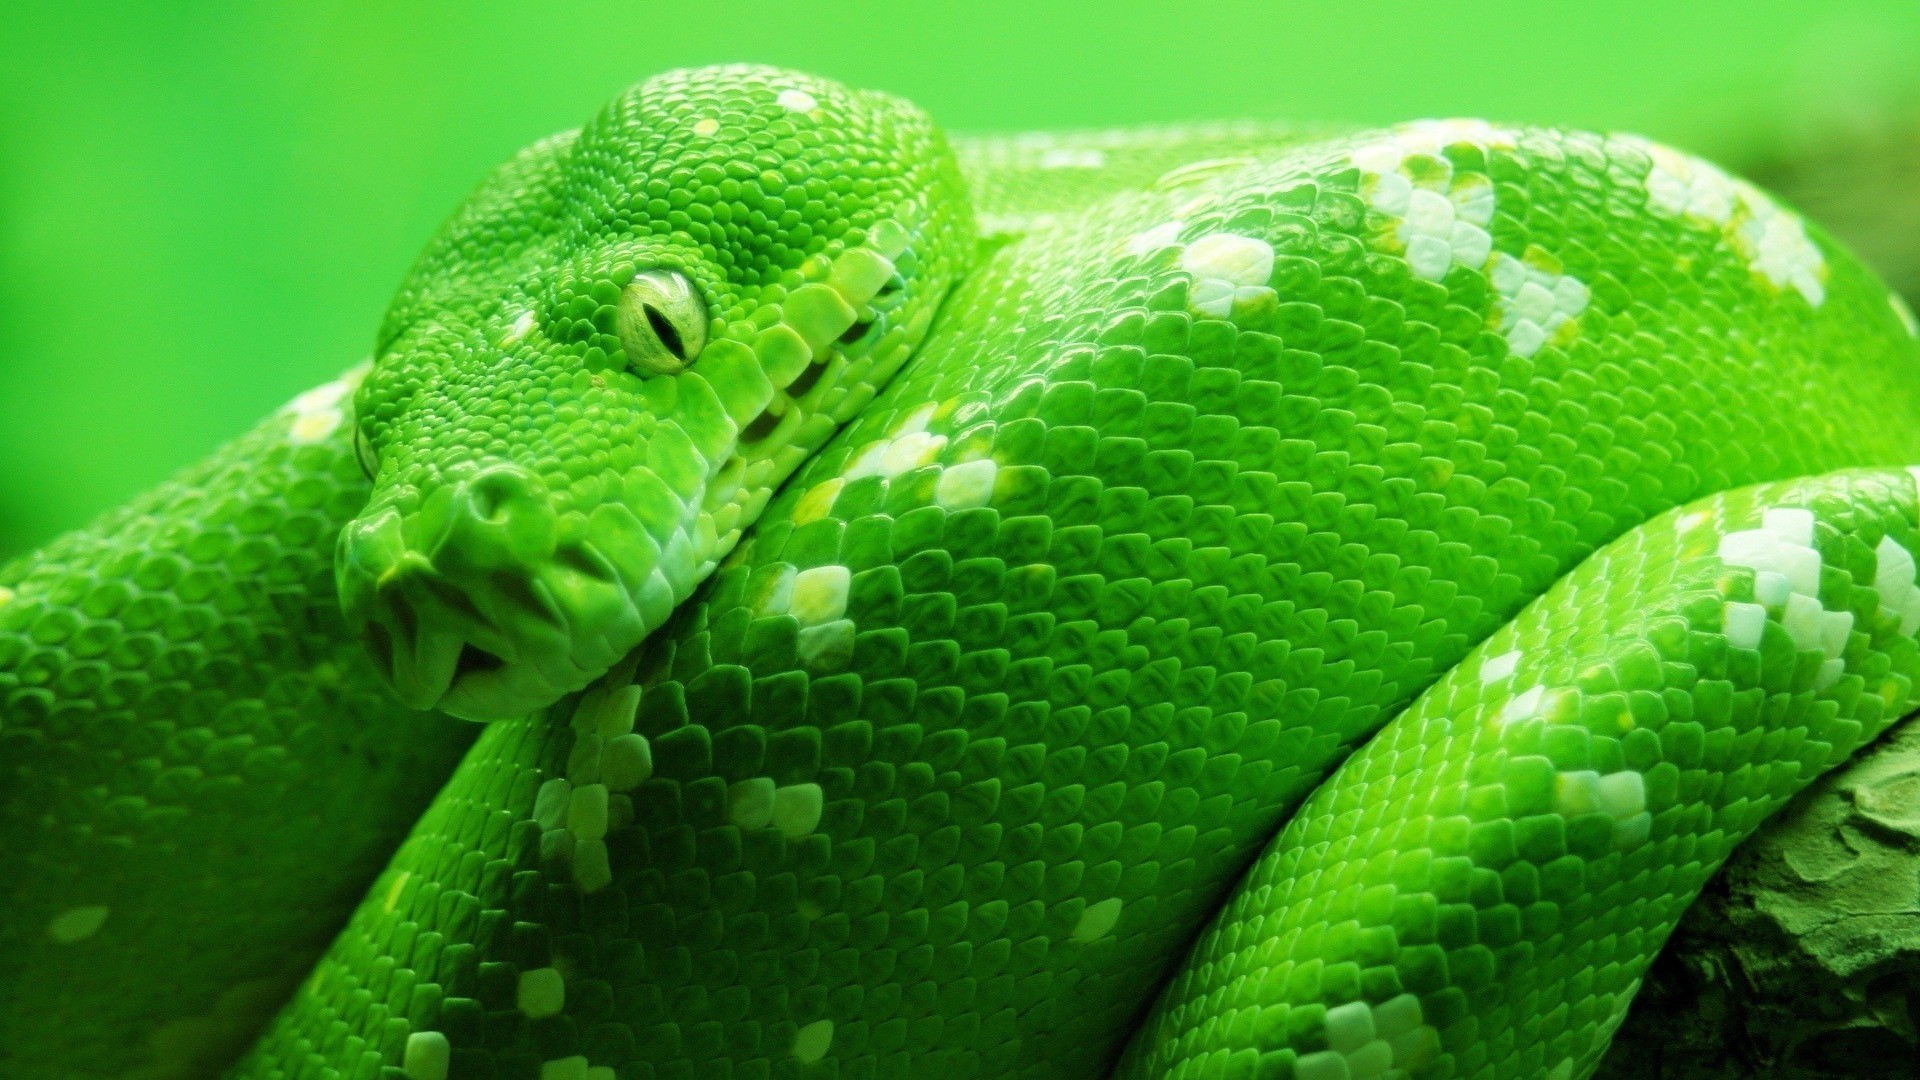 Download Green snake wallpaper